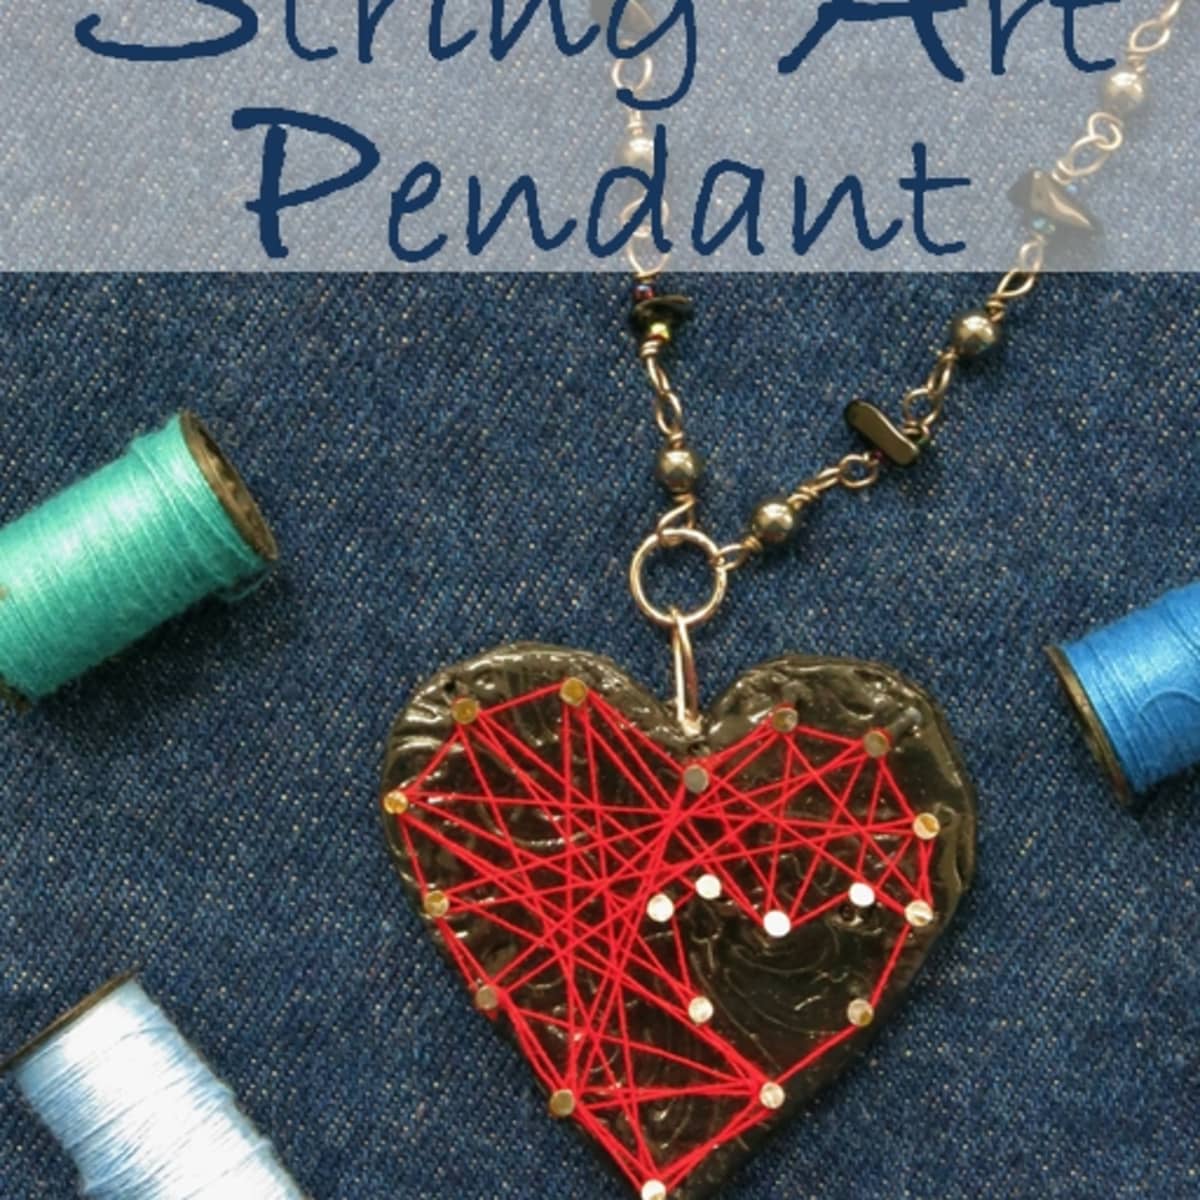 DIY Necklace: How to Make a String Art Pendant - FeltMagnet